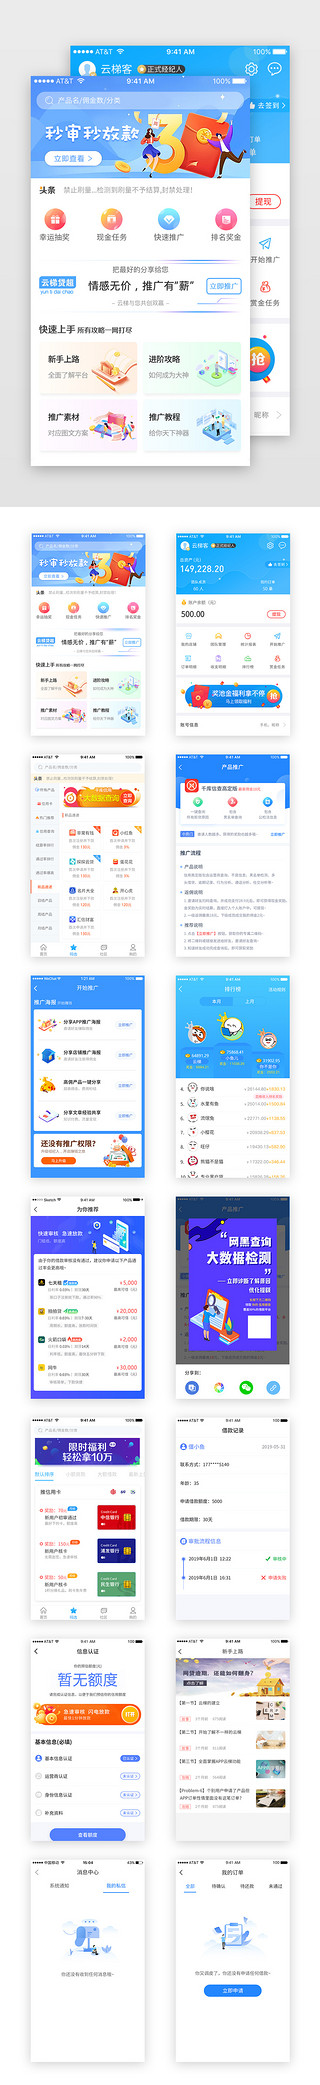 app套图界面UI设计素材_蓝色主题金融贷款APP套图